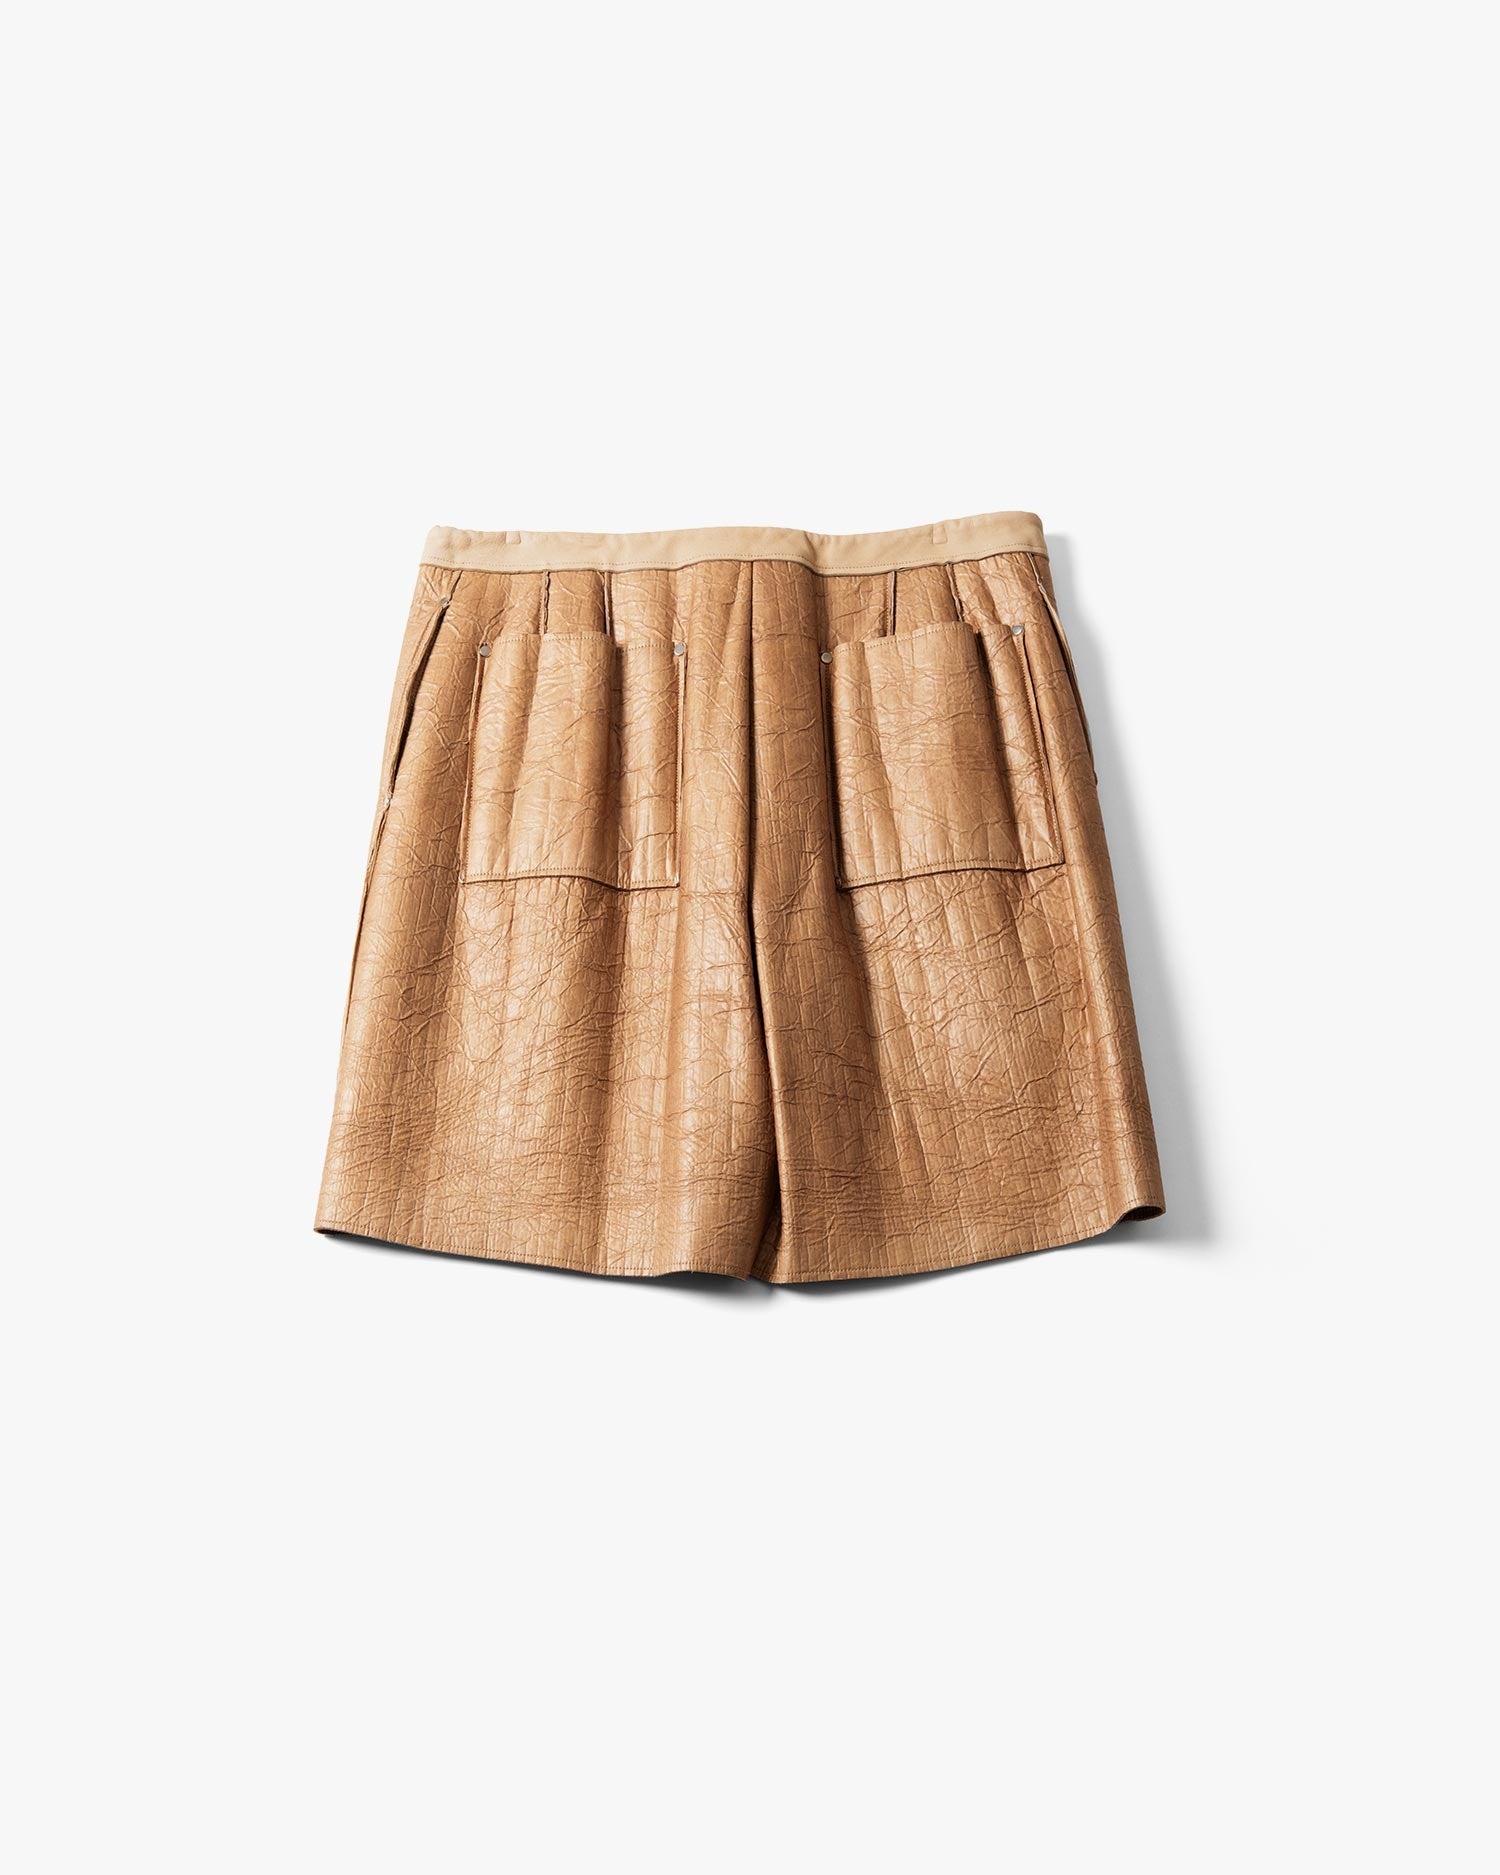 Cardboard Leather Shorts